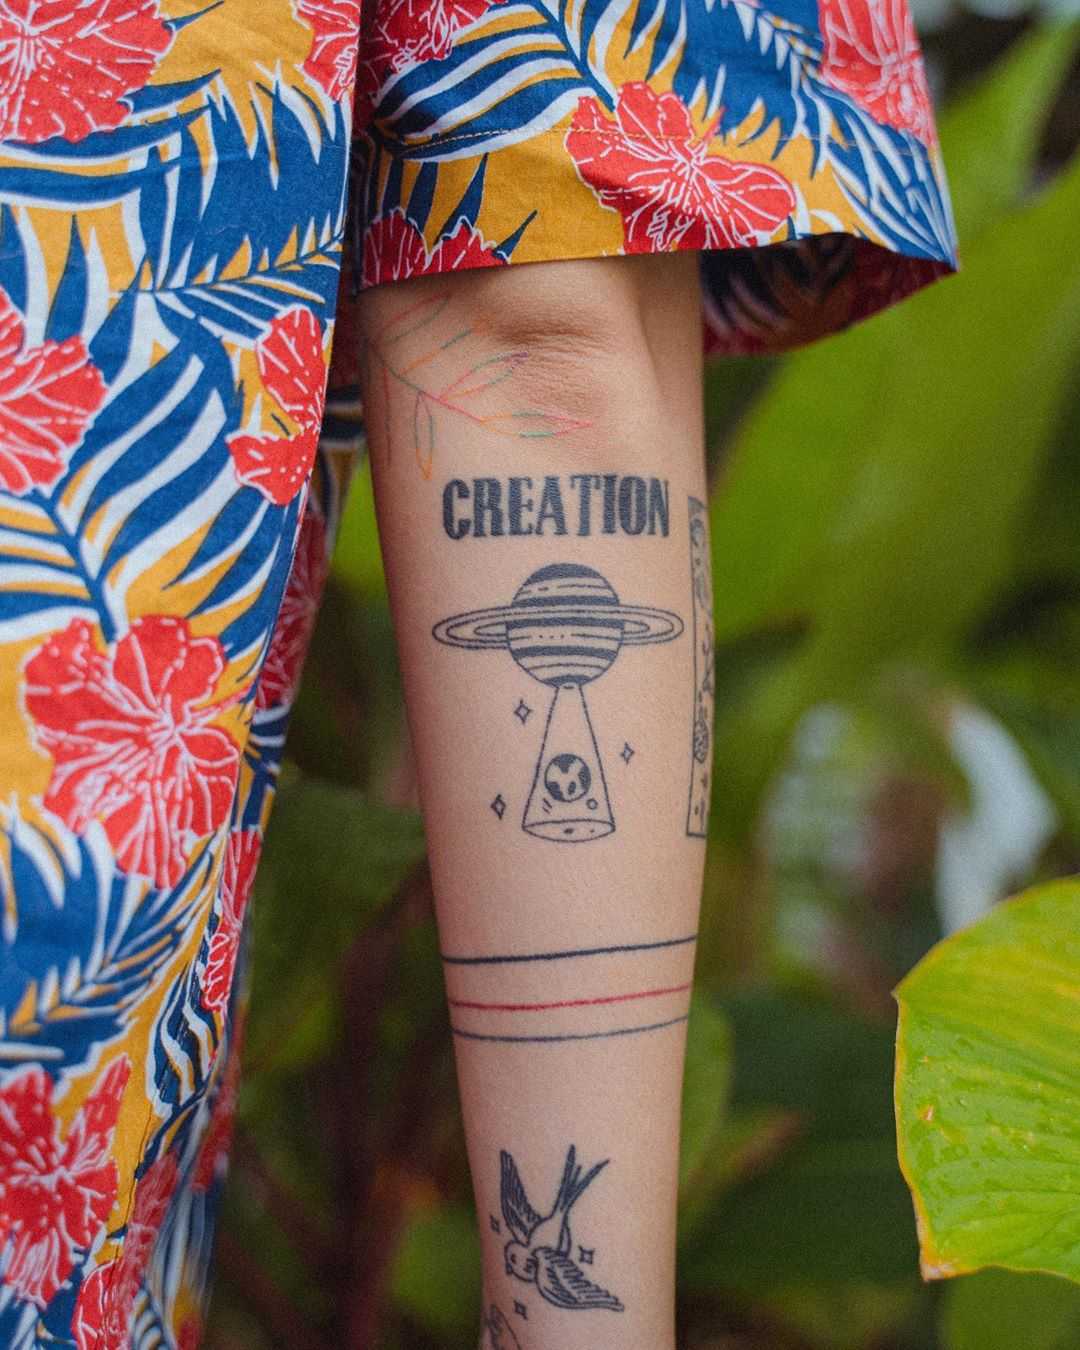 Creation by tattooist Bongkee